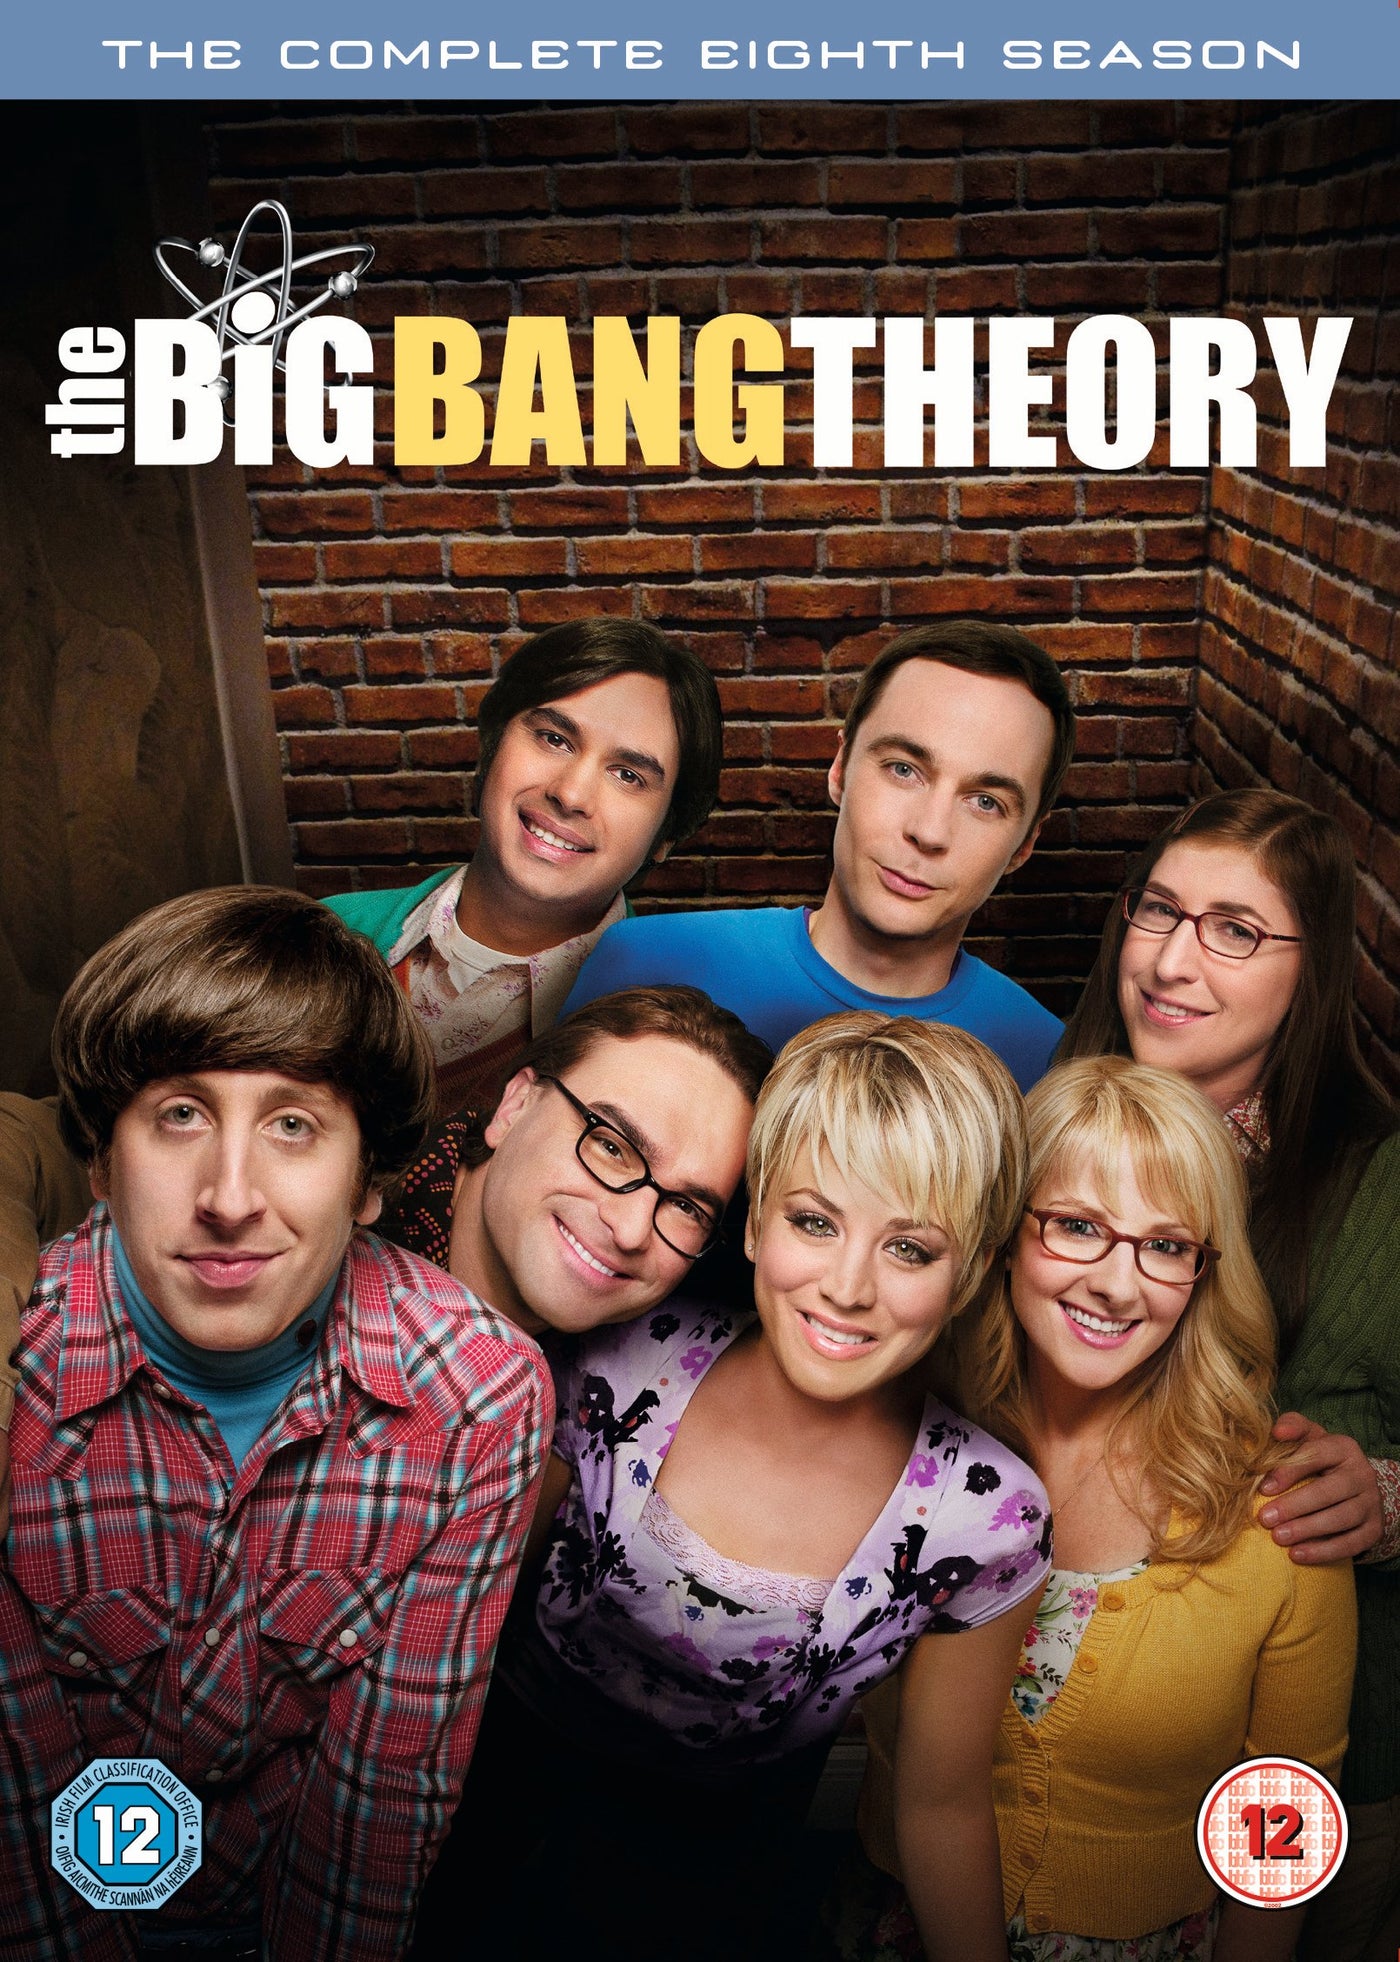 The Big Bang Theory - Season 8 (DVD)